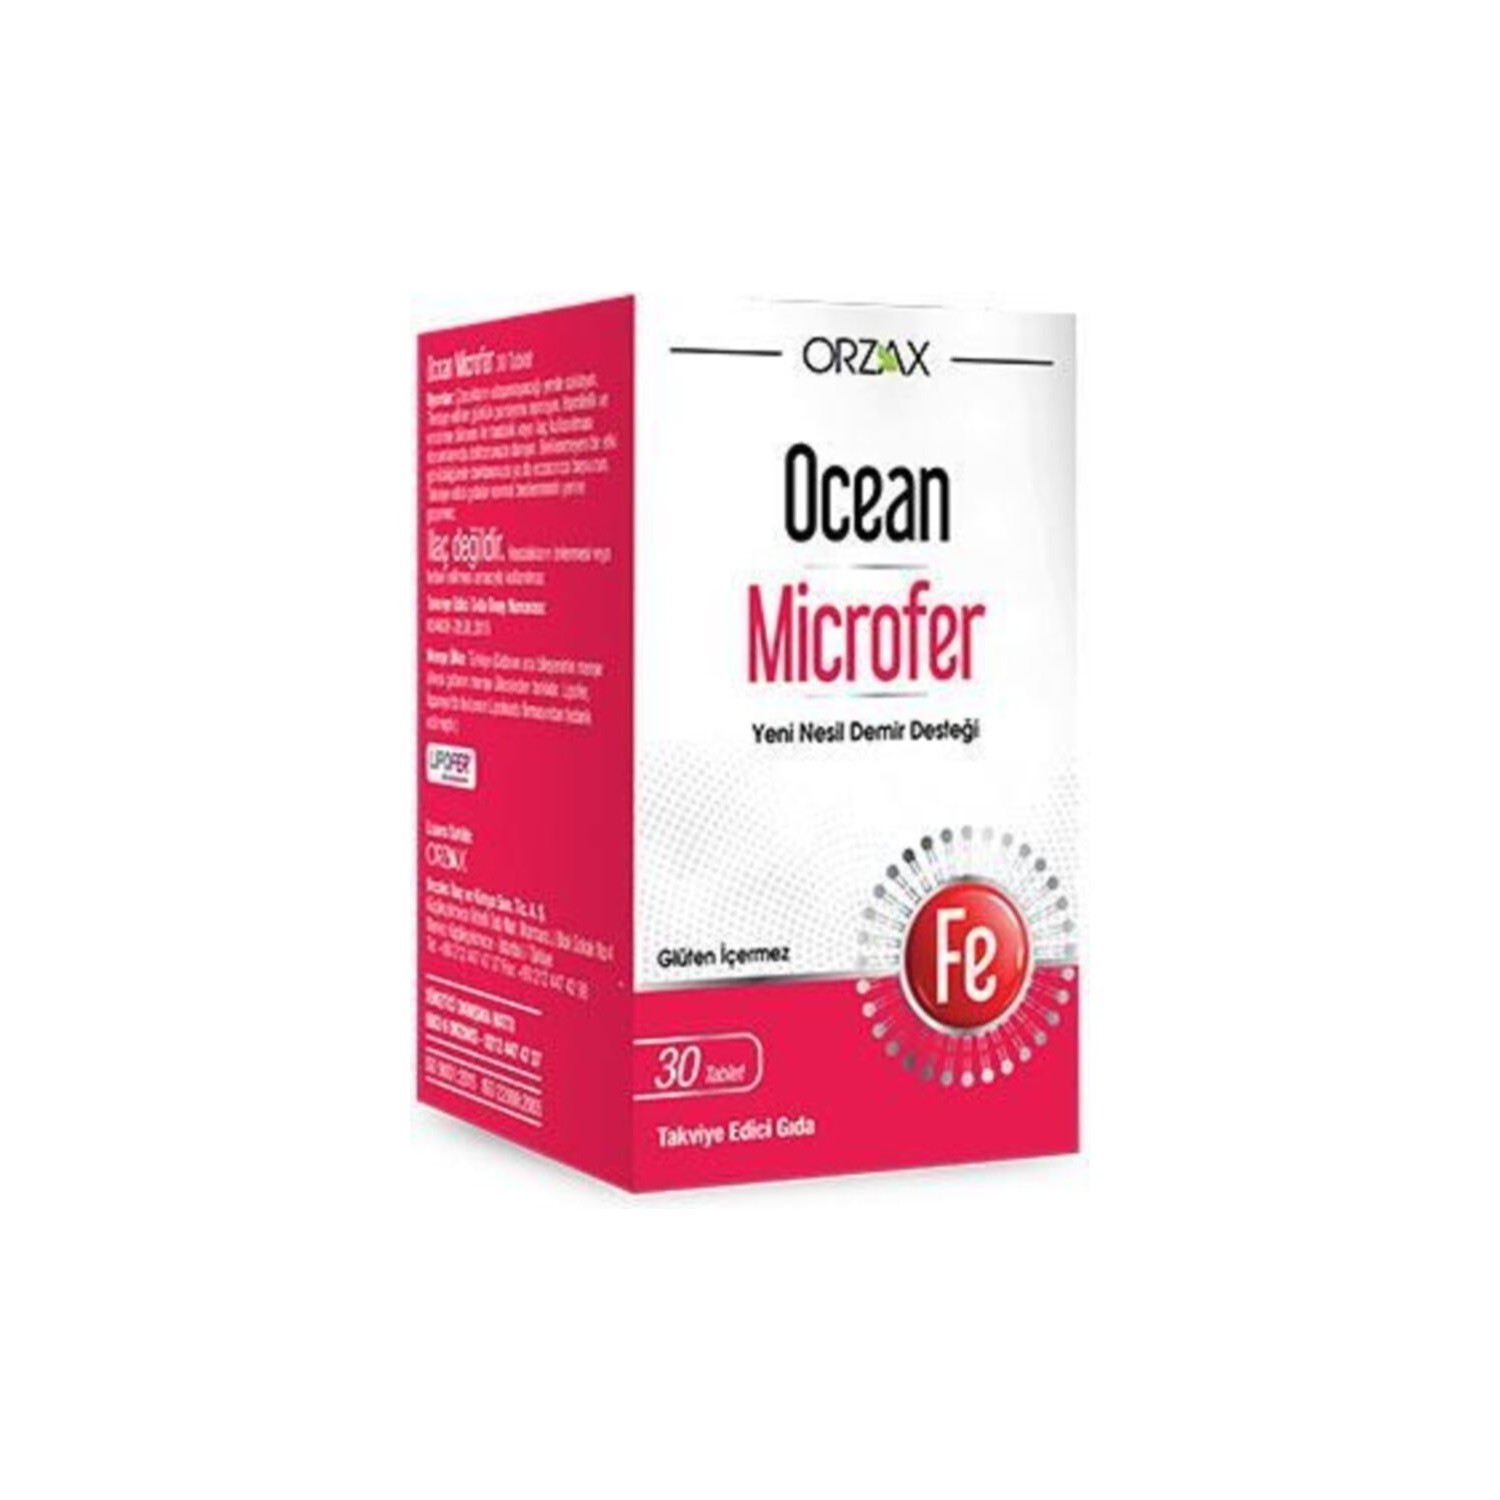 Пищевая добавка Orzax Ocean Microfer, 30 таблеток